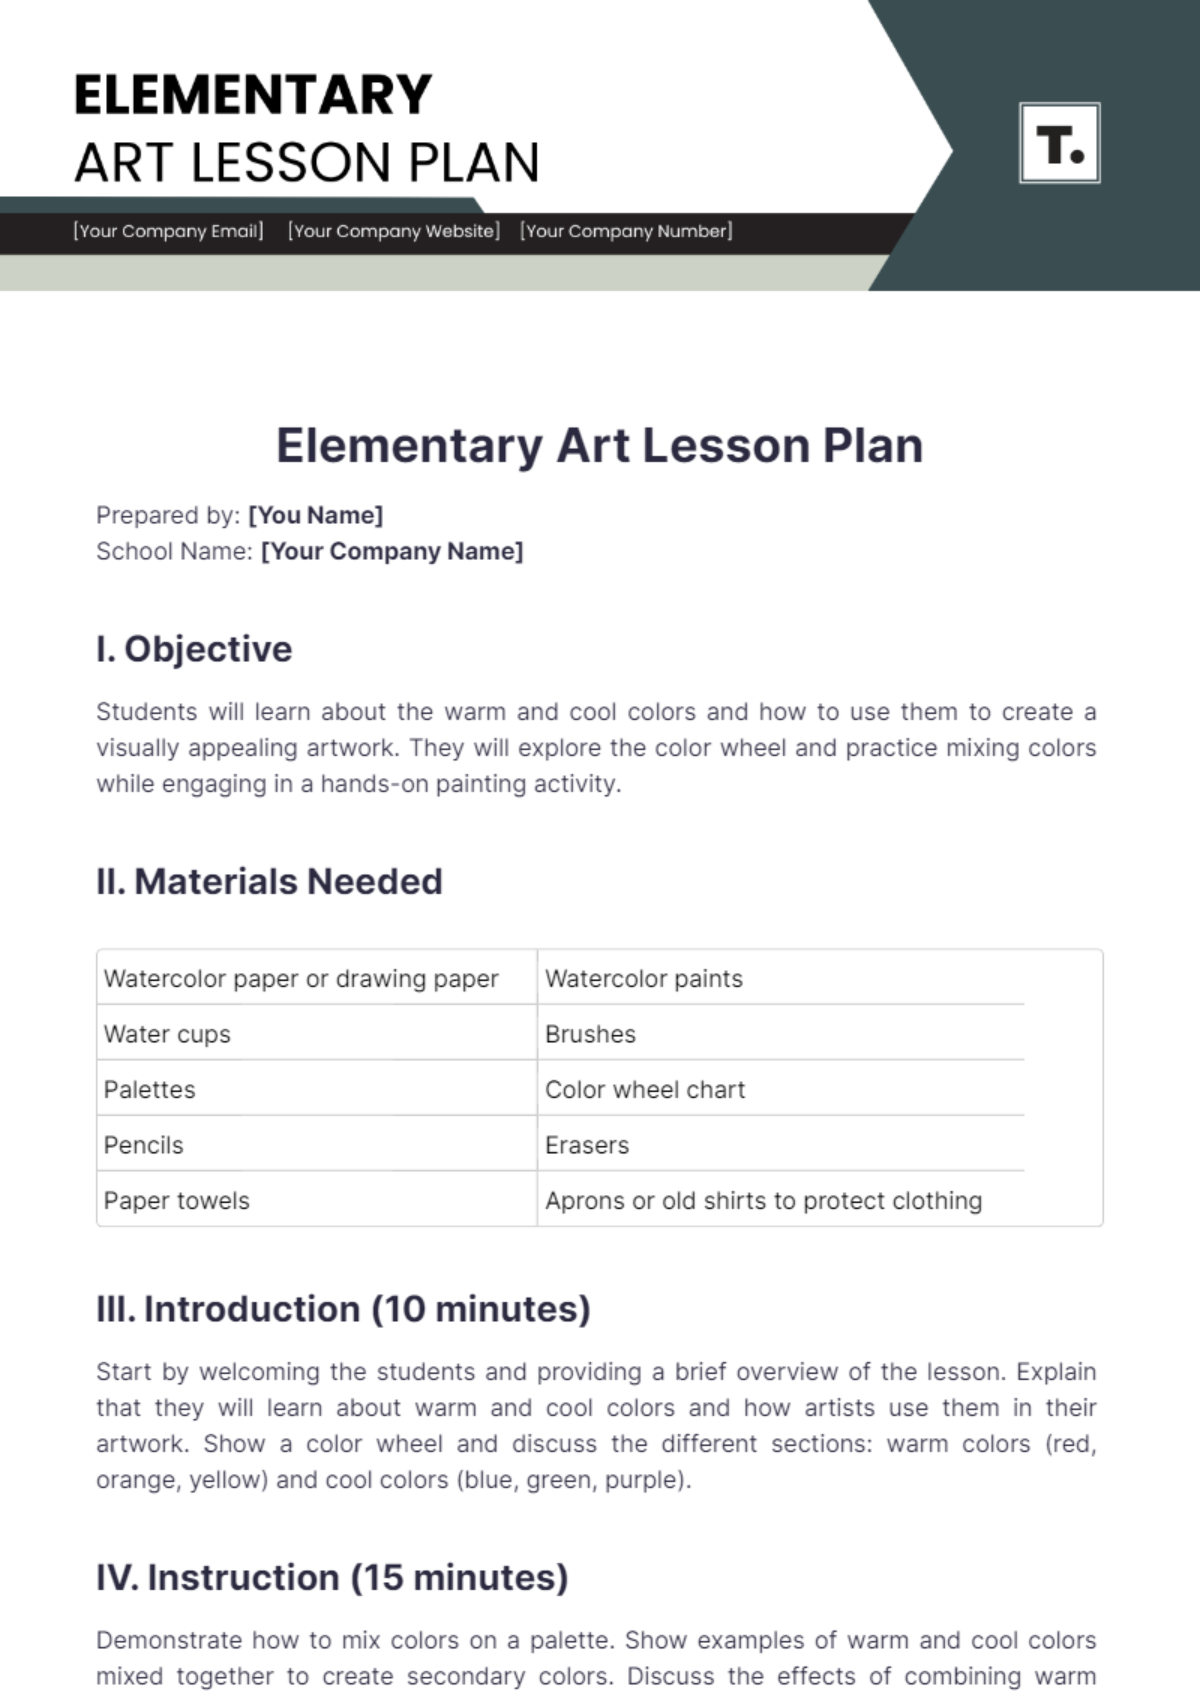 Free Elementary Art Lesson Plan Template